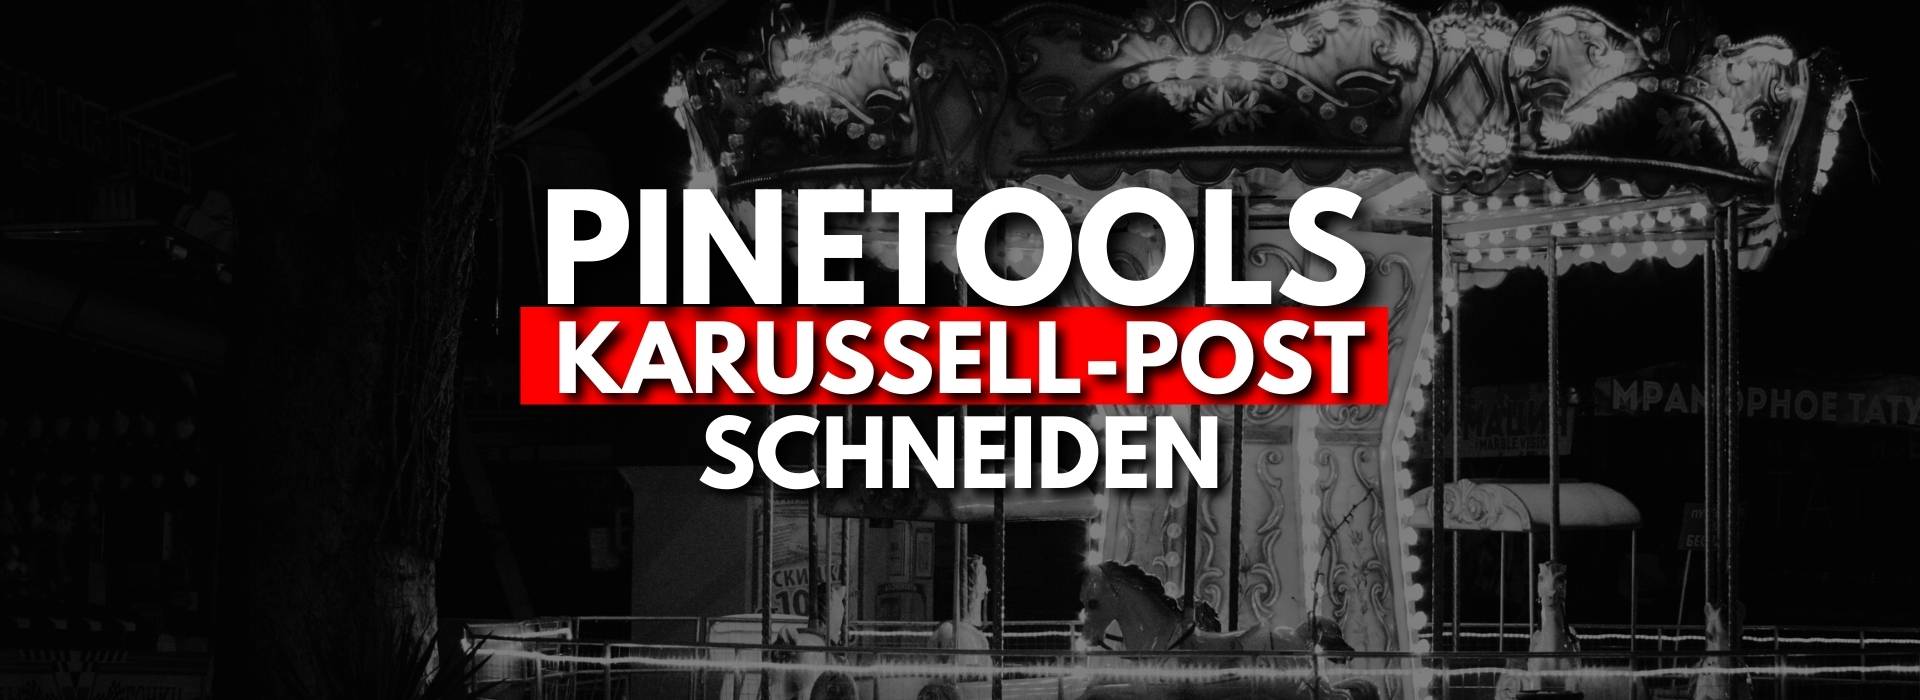 Pinetools Karussell Posts schneiden Leo Brockhausen Canva Blog